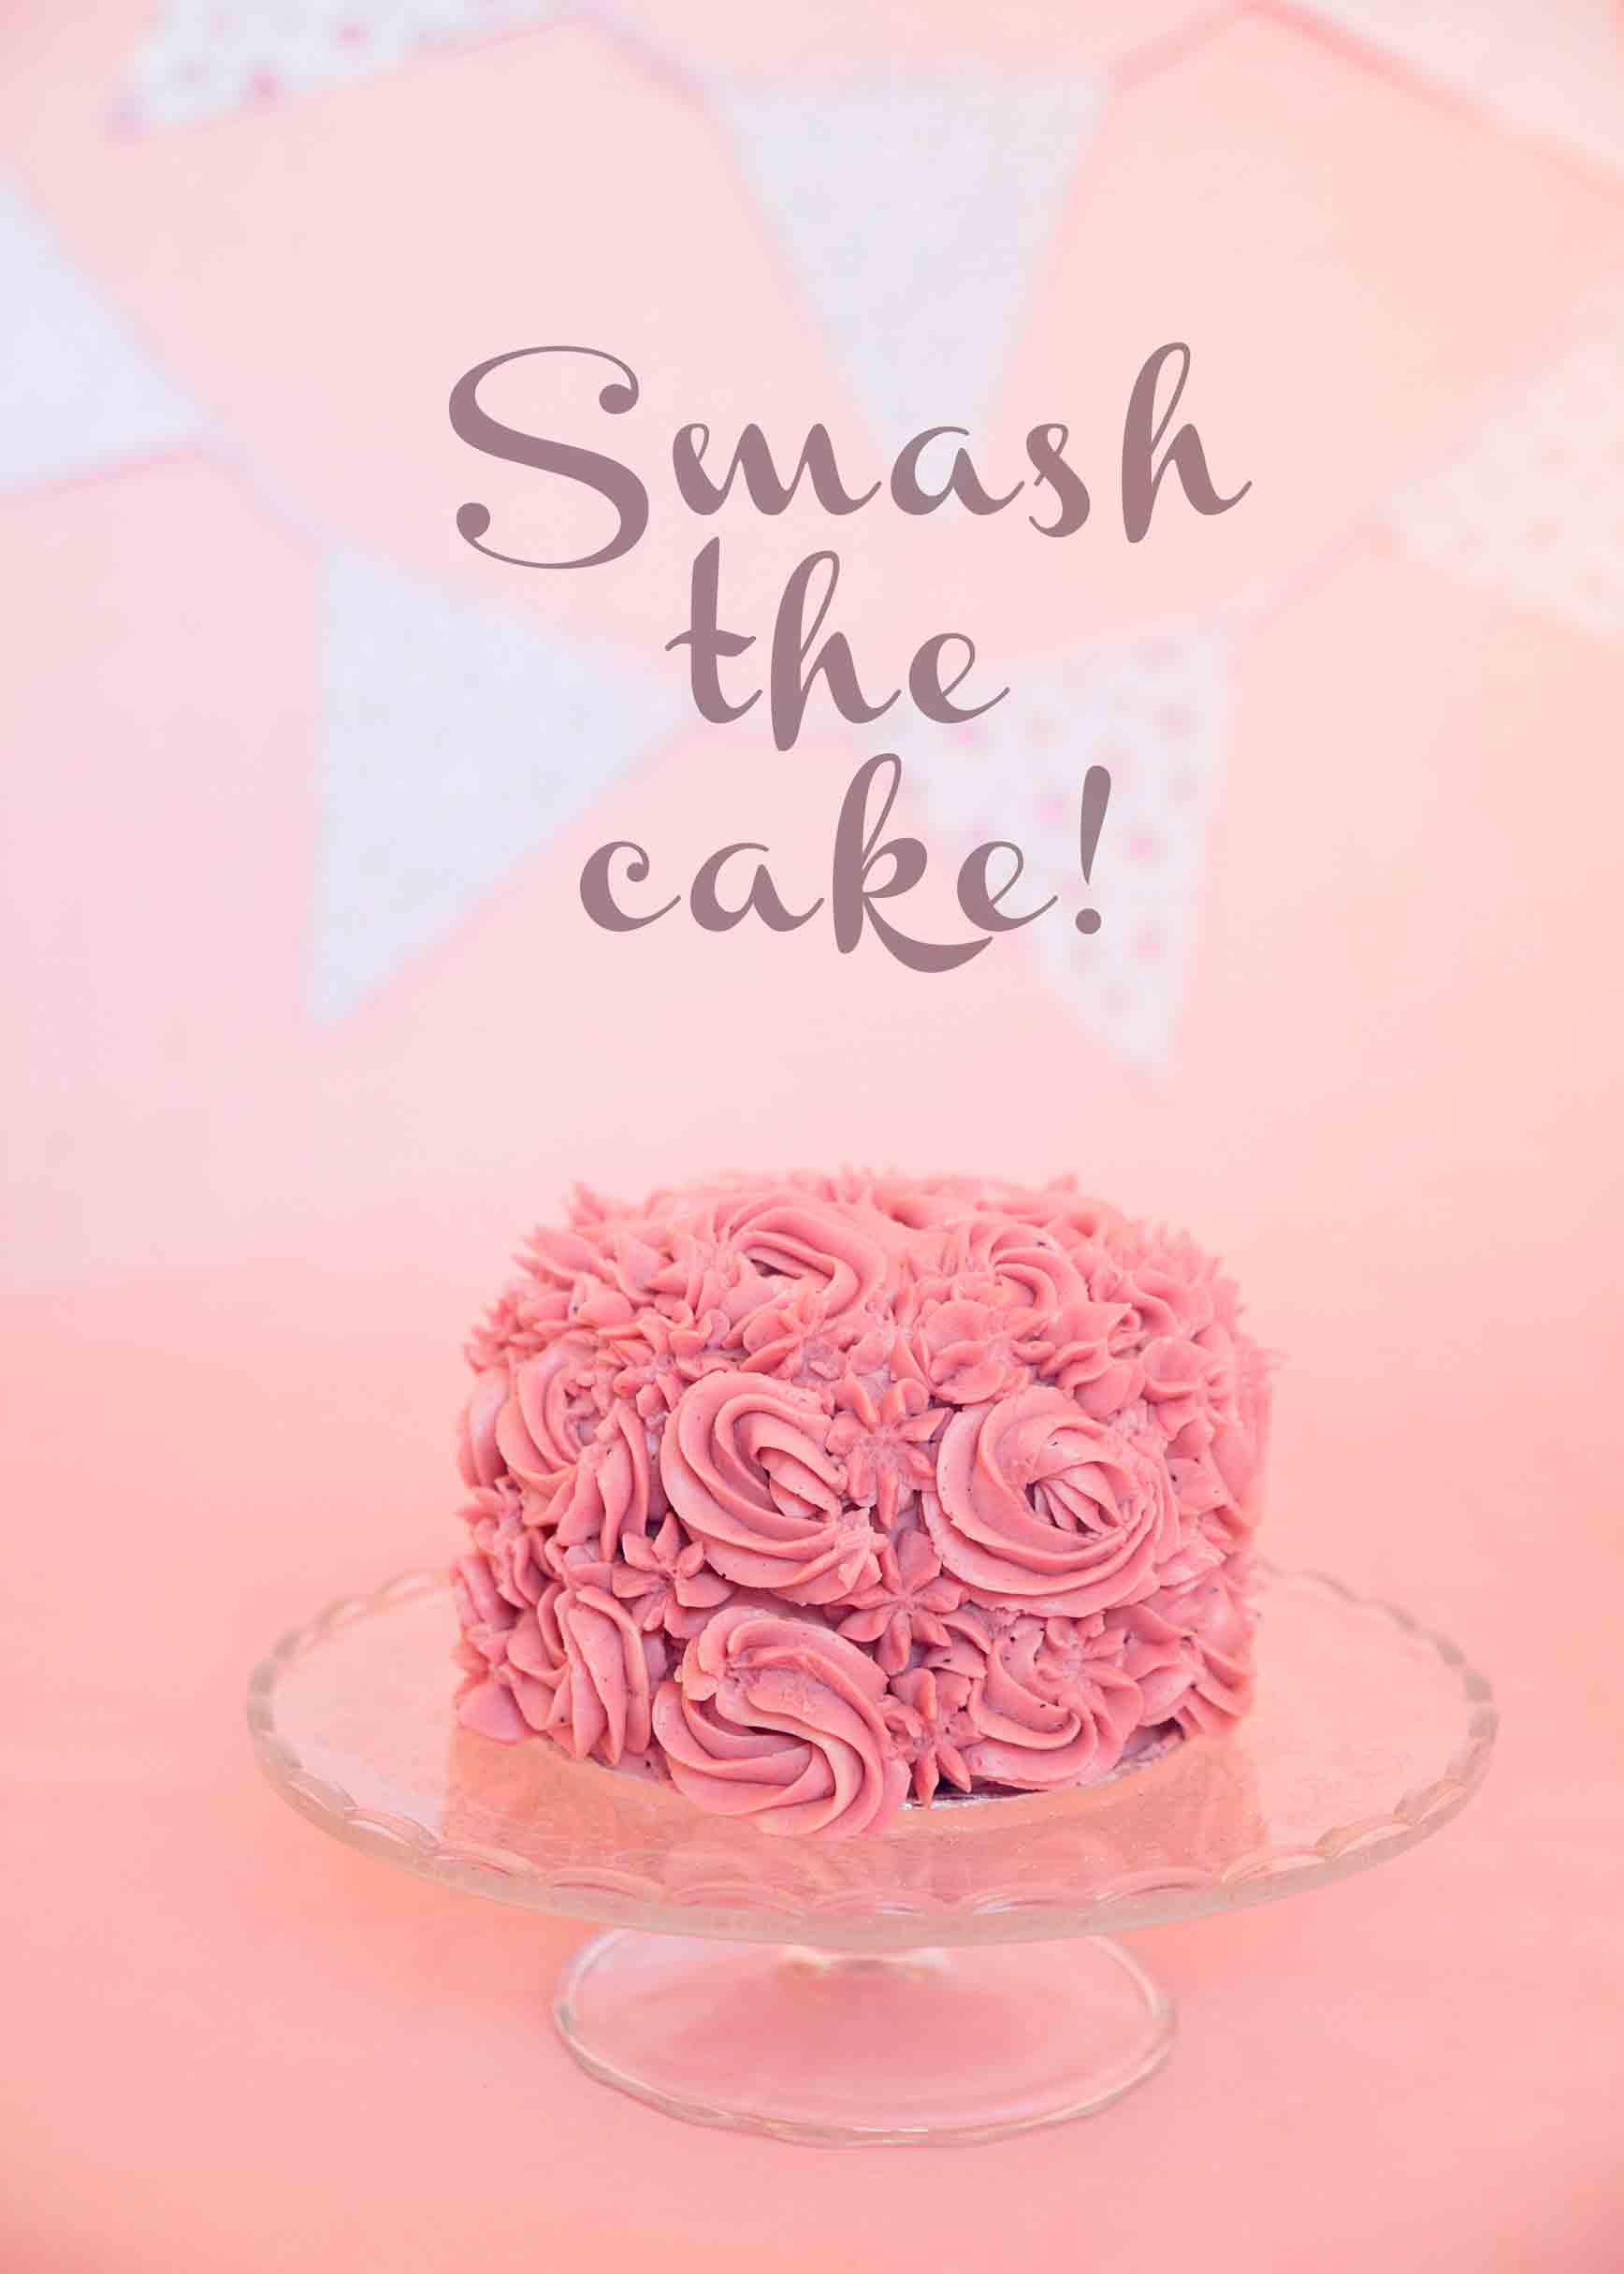 smash the cake